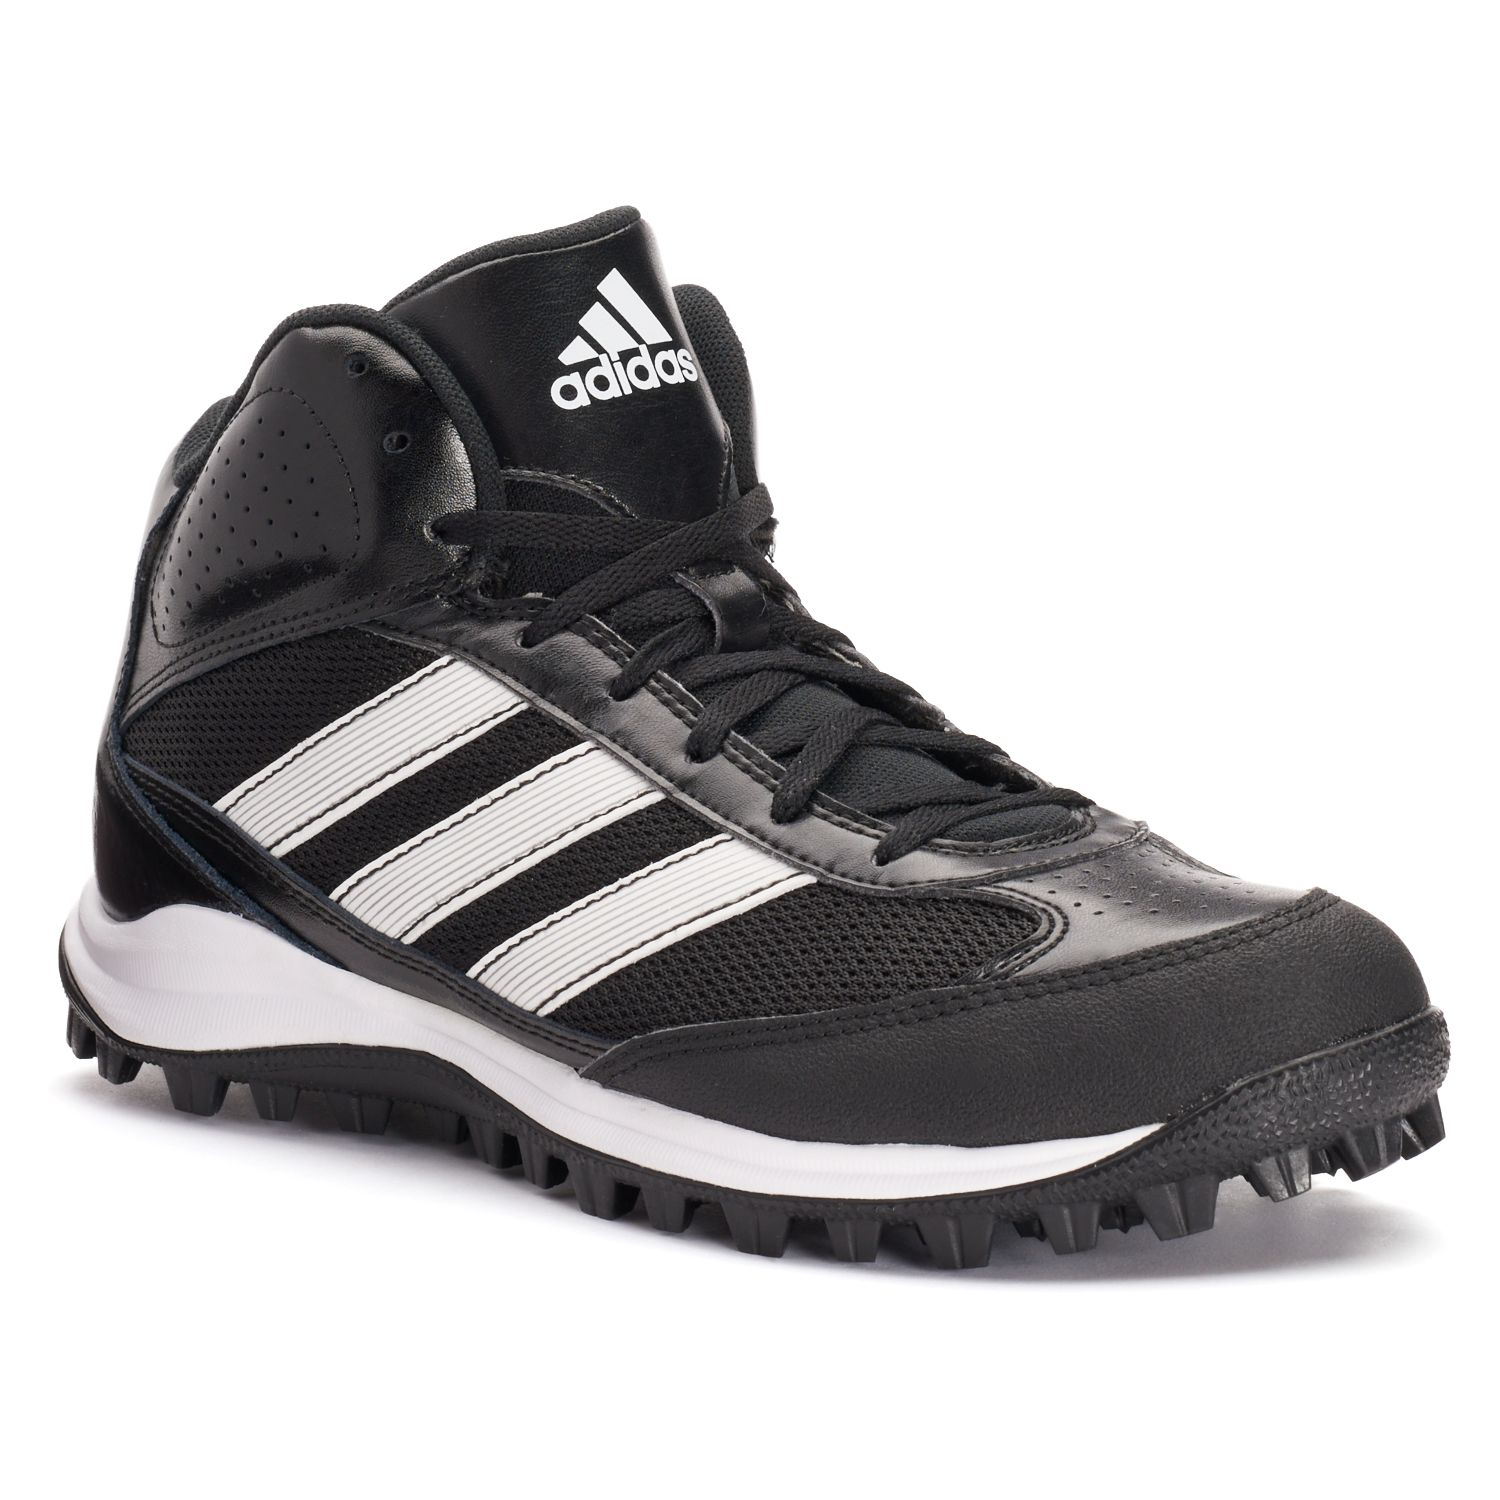 adidas men's football turf shoes